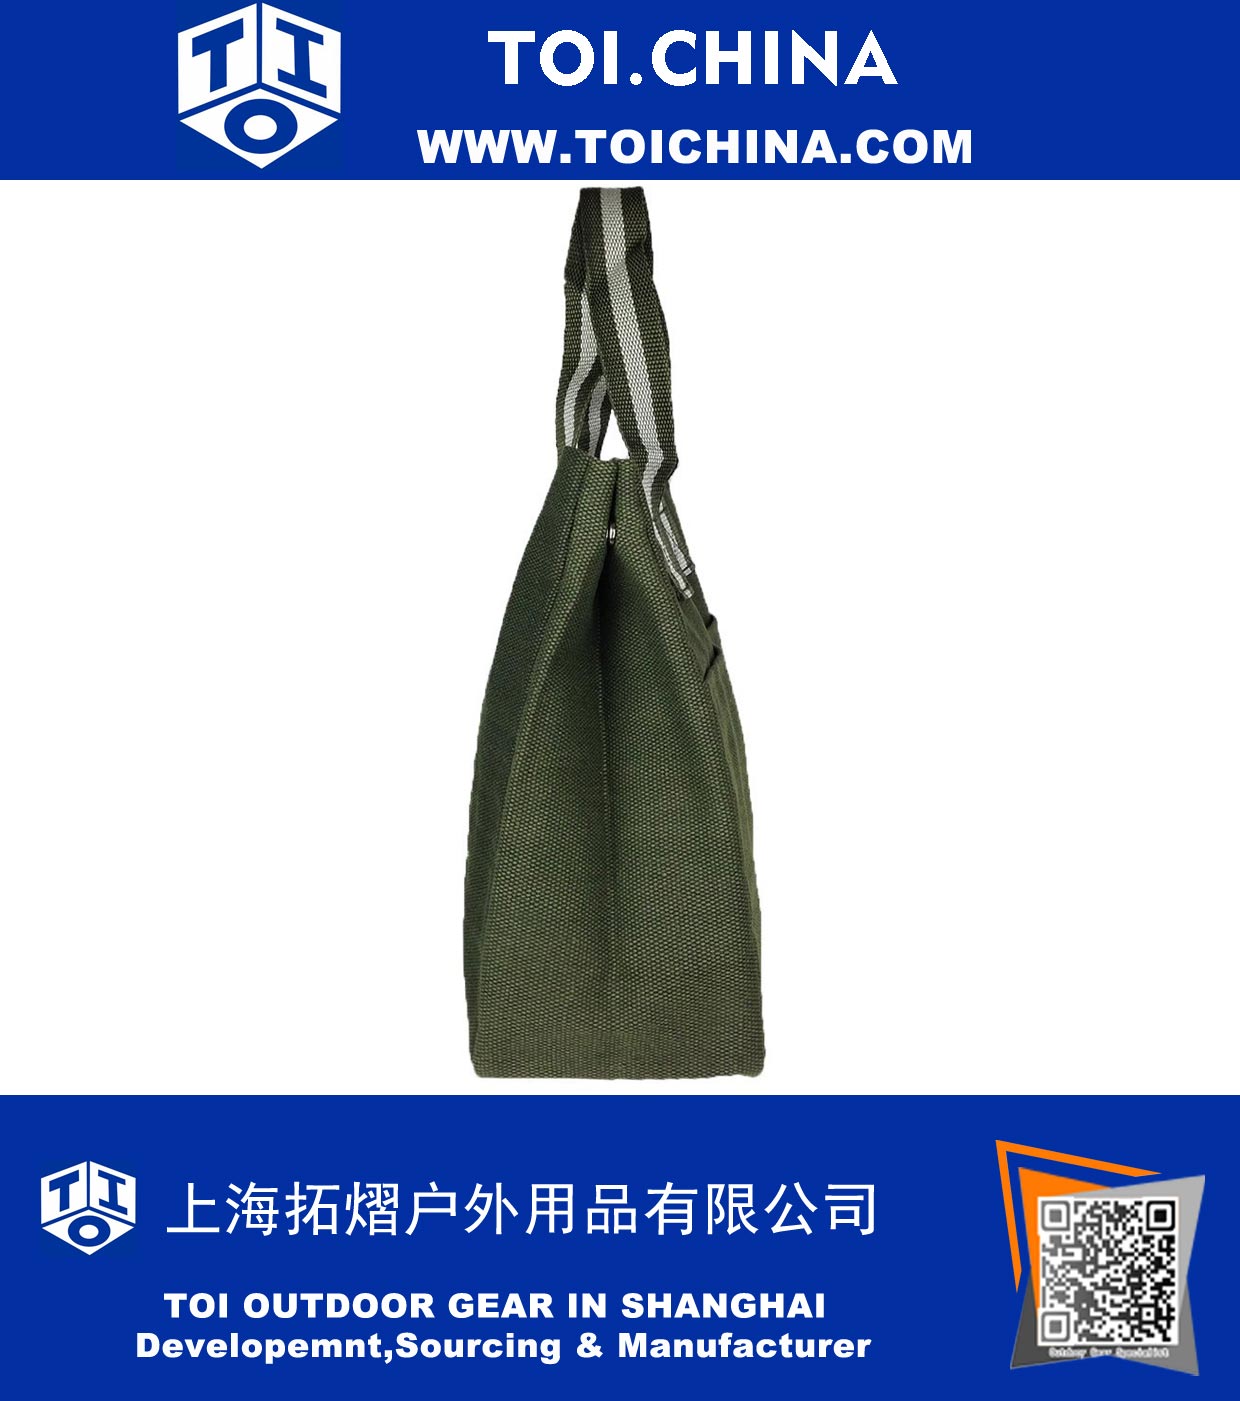 Color Cooler Thermal Bag